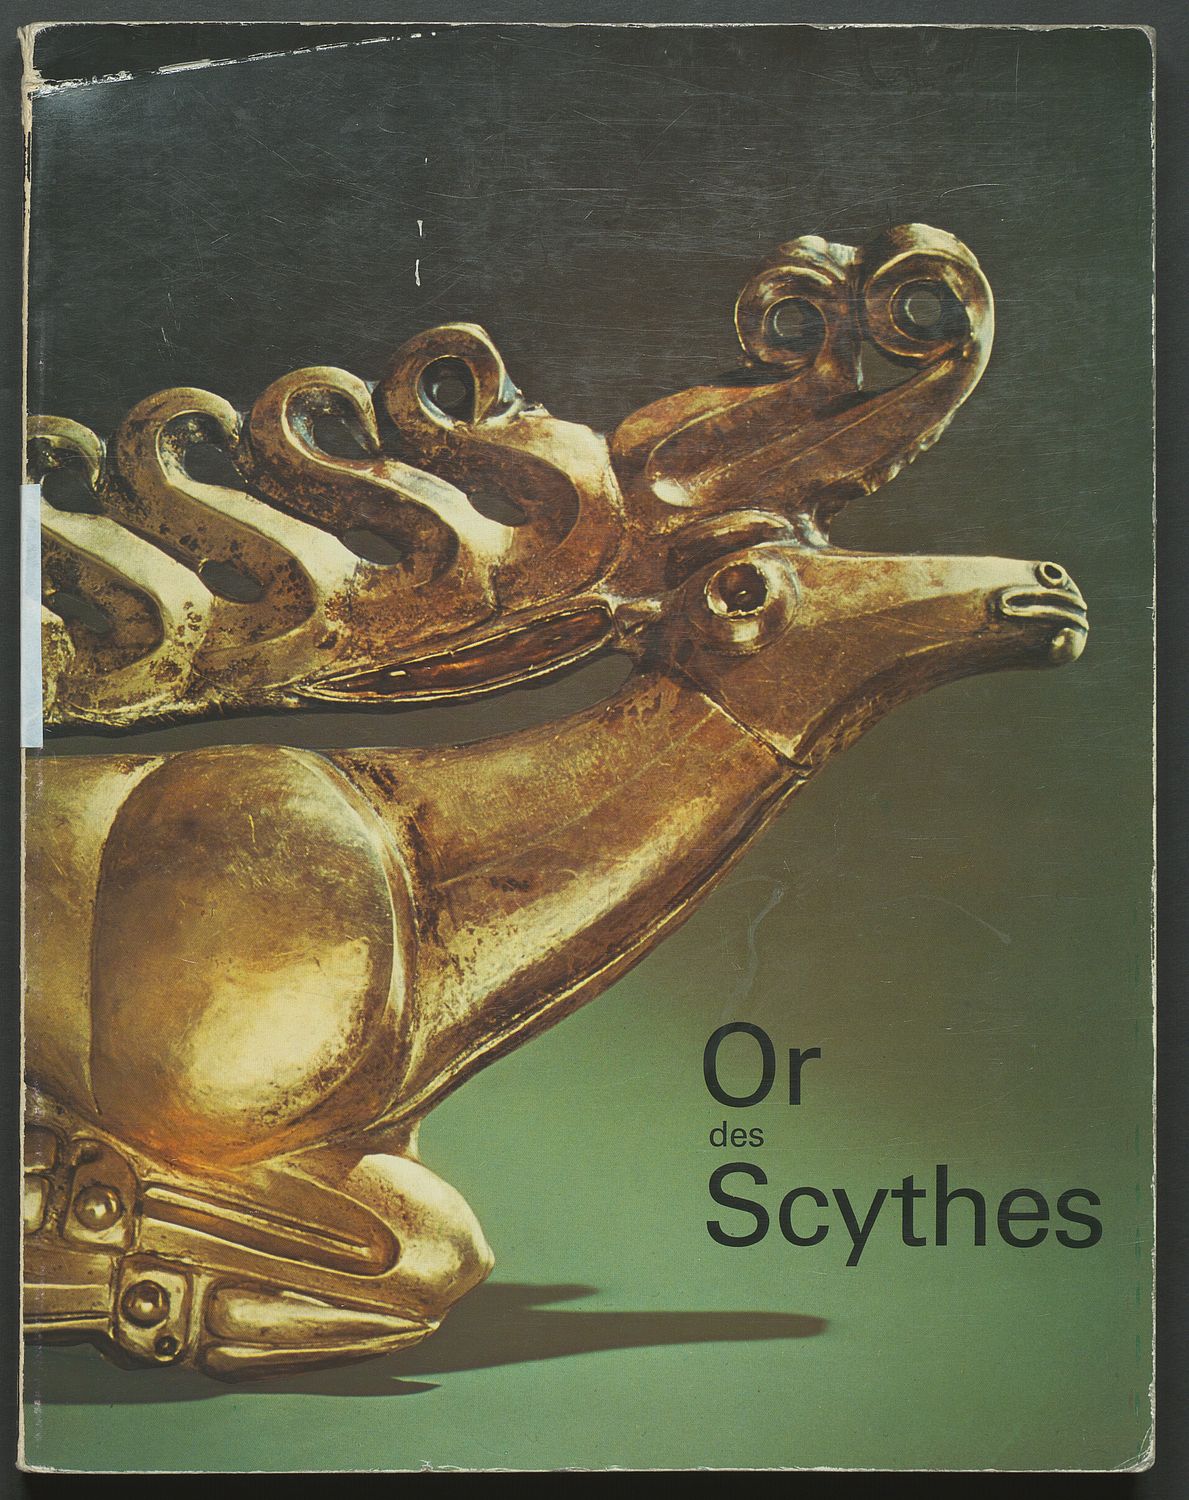 Or des Scythes